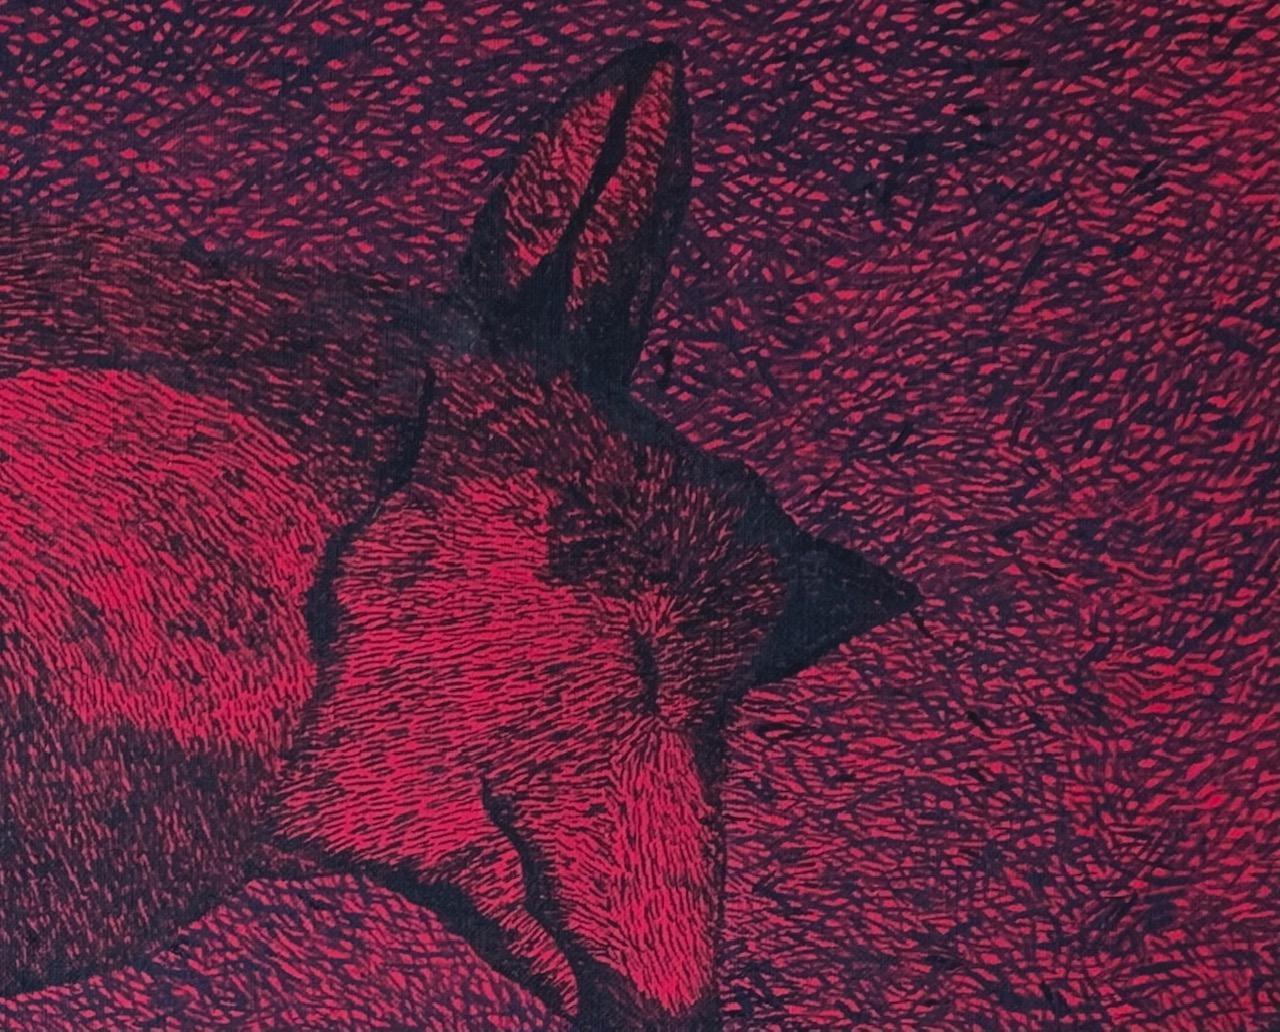 Hunting Hunter 2 (Sleeping Wolf) - Animals Oil Painting, Magical Realism, Nature - Black Animal Painting by Aleksandra Bujnowska